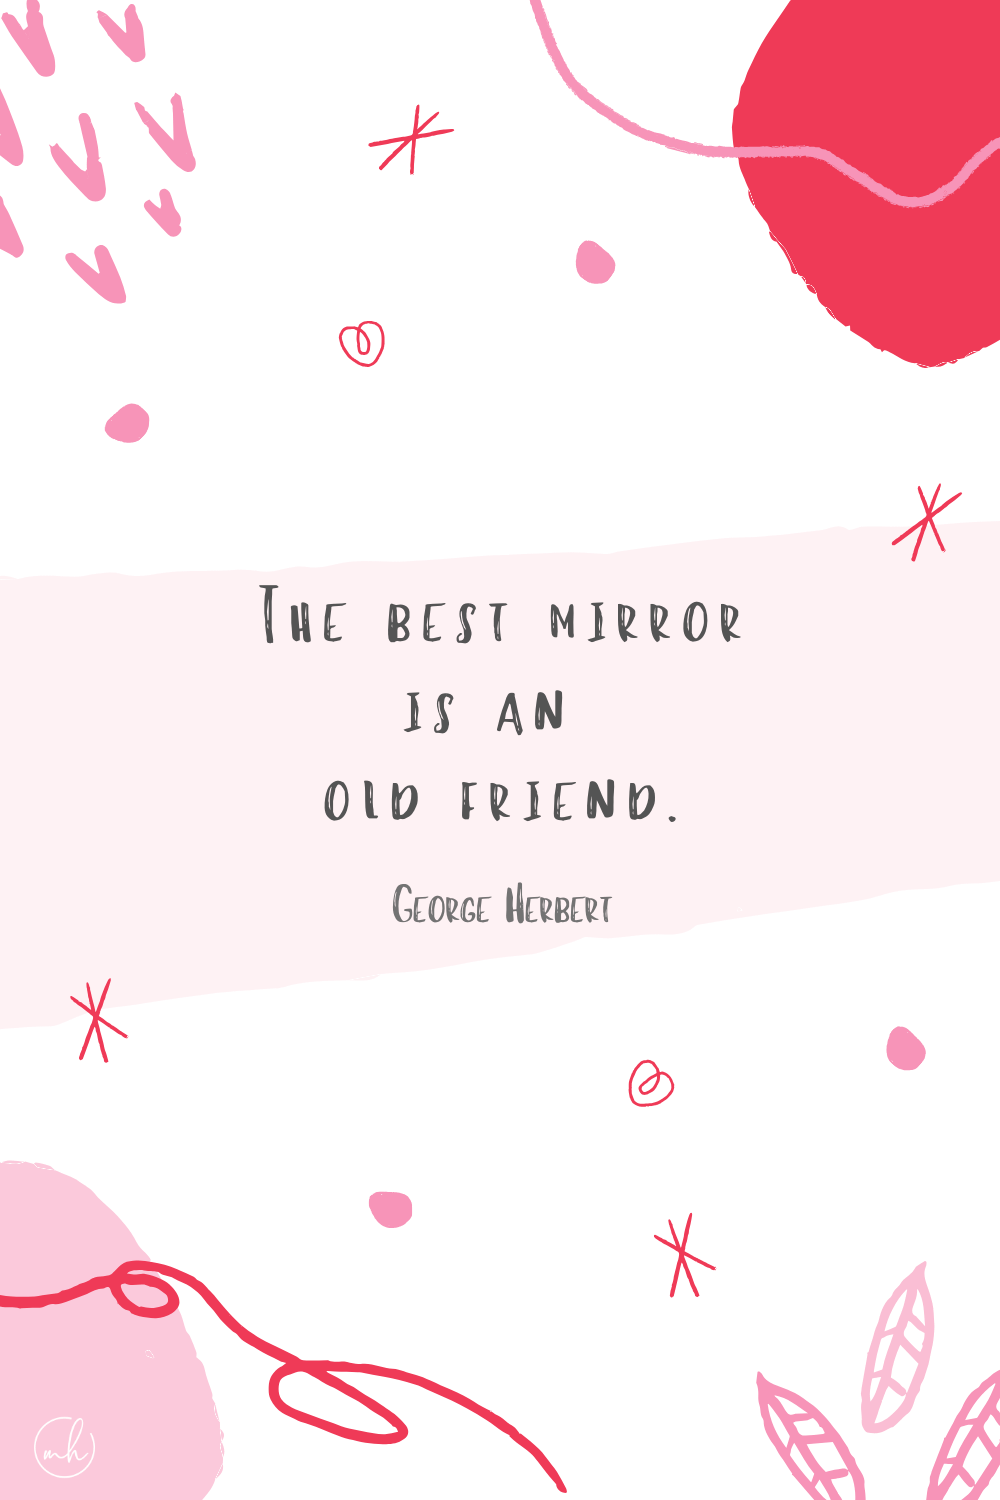 "The best mirror is an old friend." - George Herbert